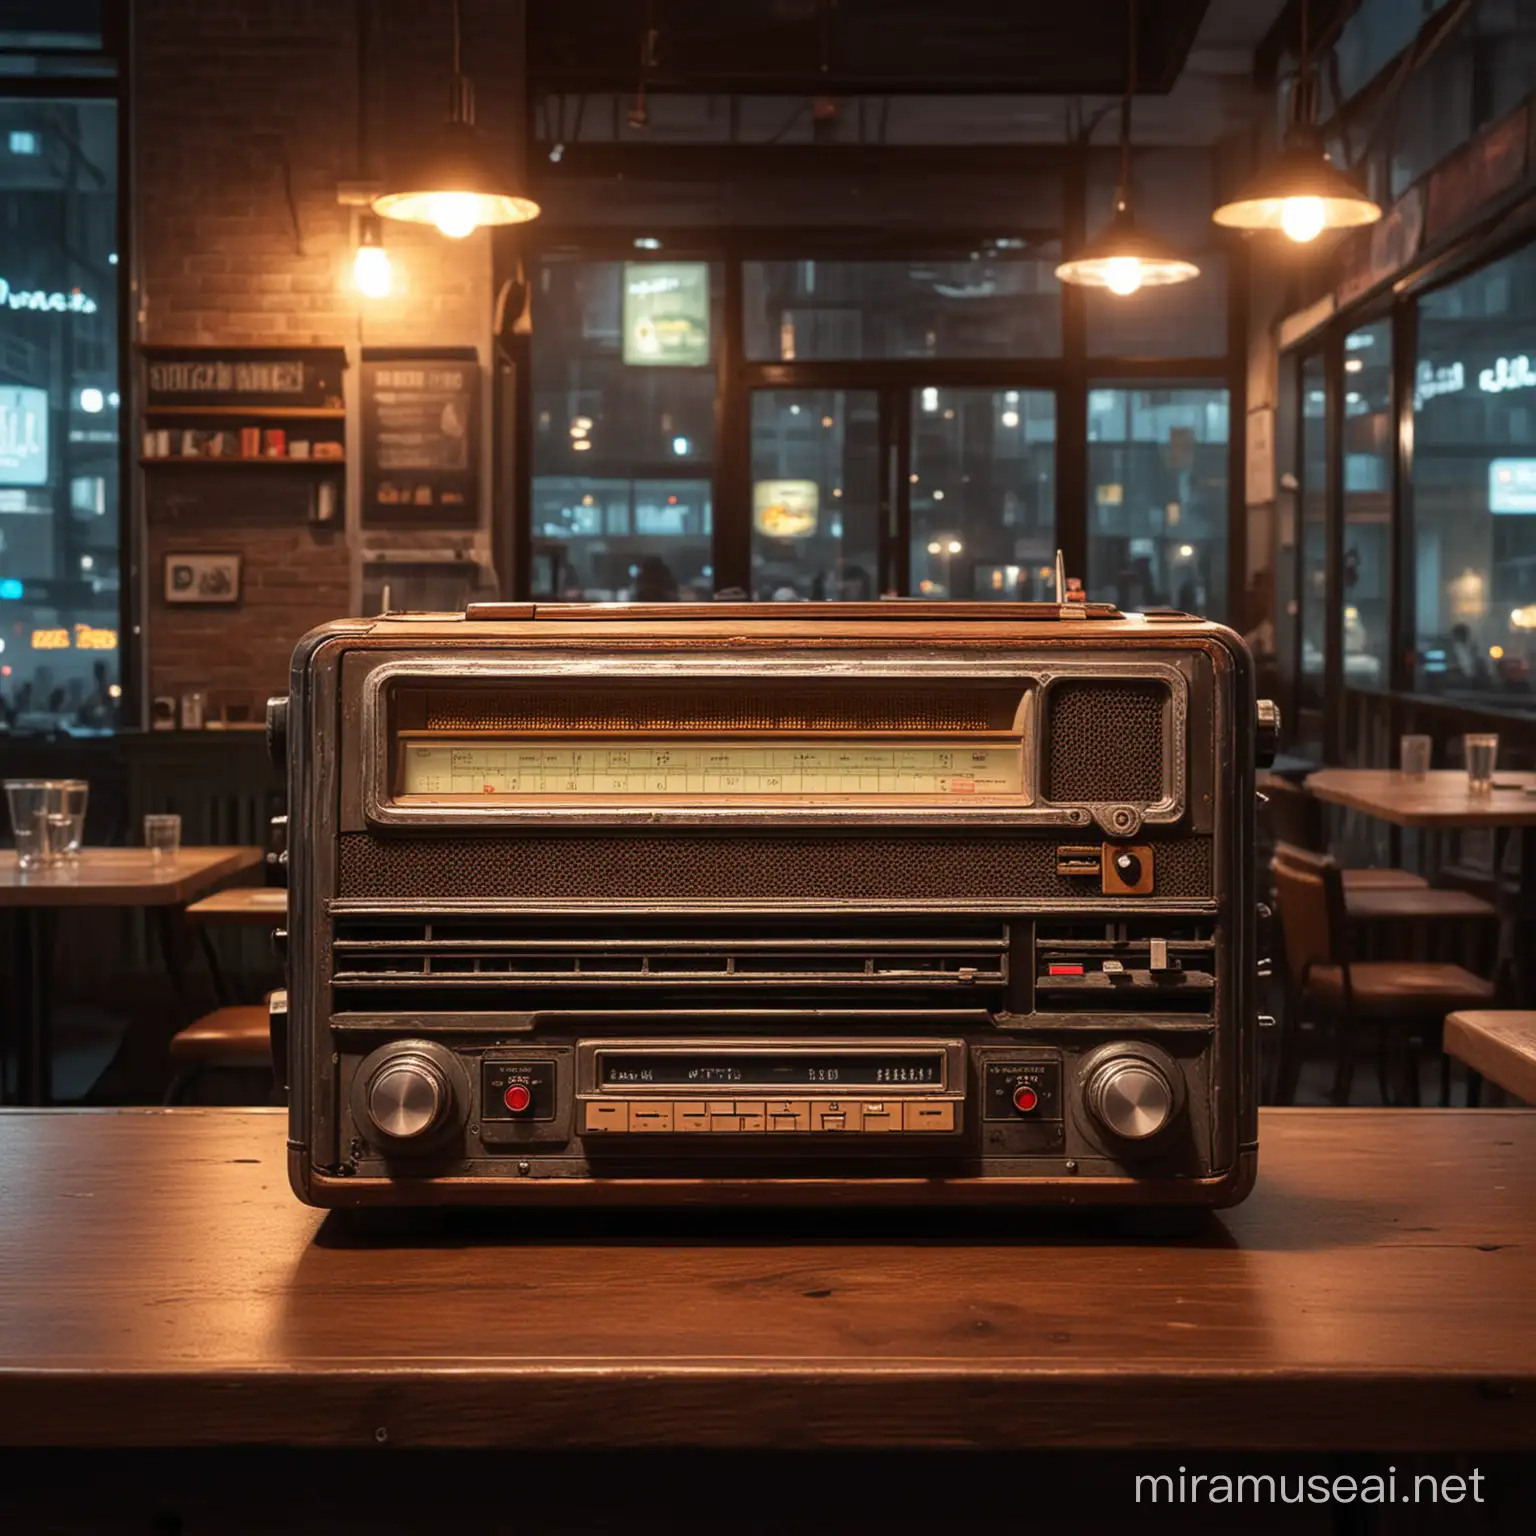 Vintage Radio in Cyberpunk Night City Cafe